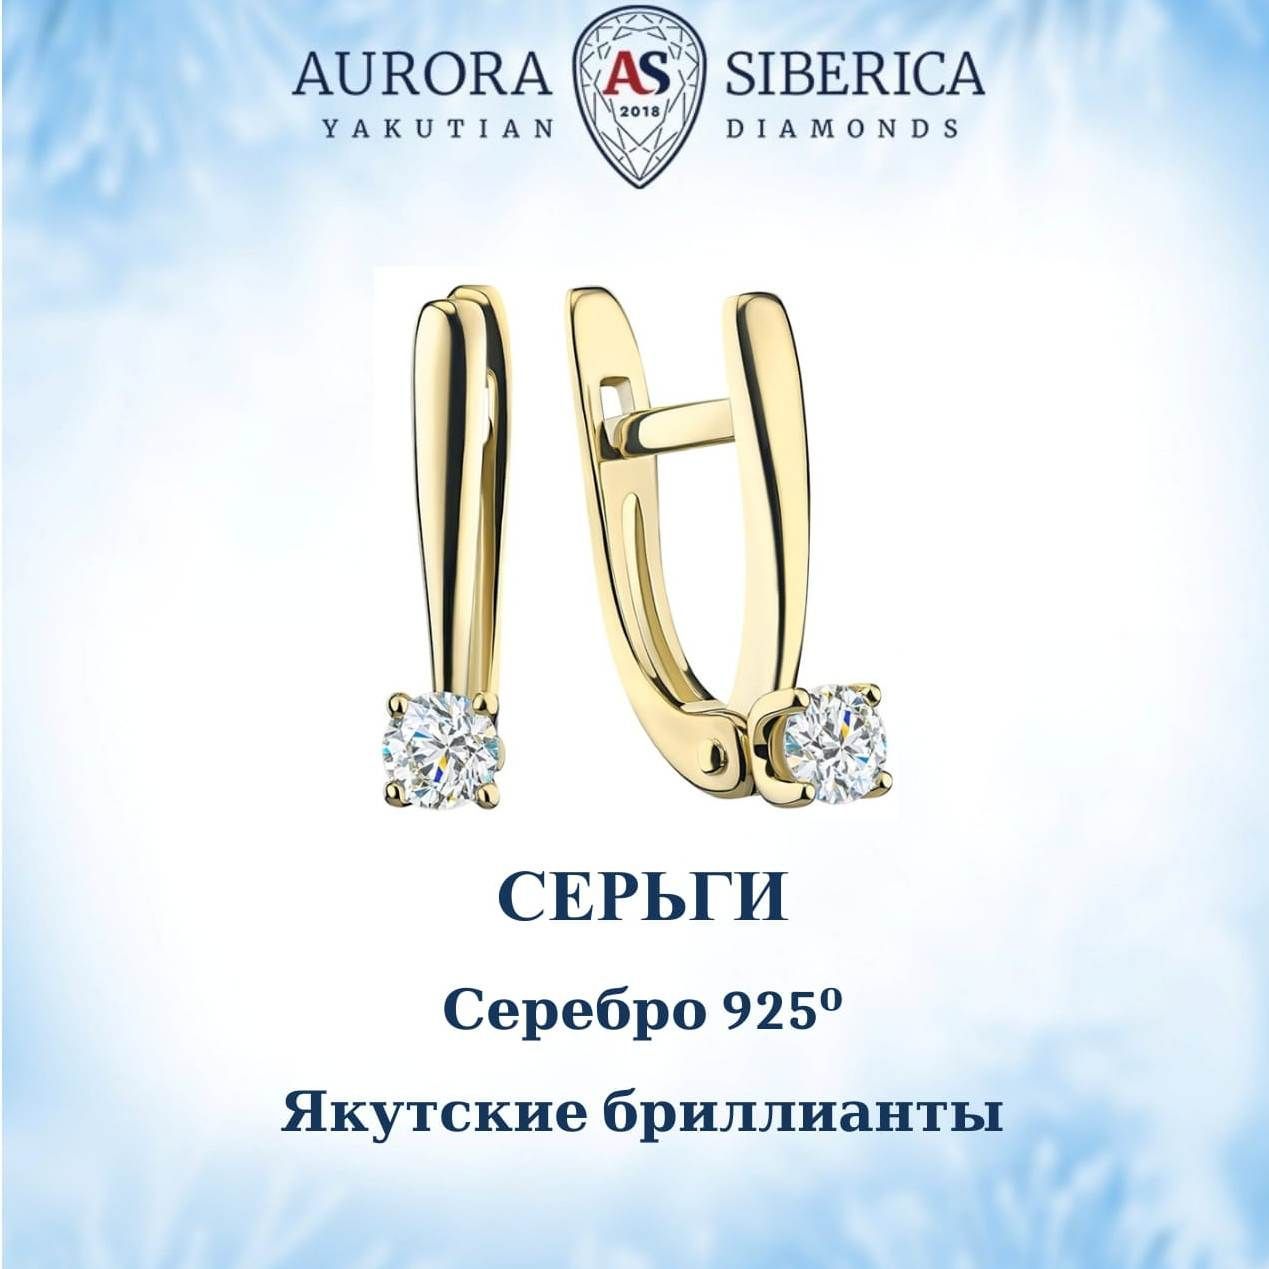 Серьги из серебра AURORA SIBERICA. Якутские бриллианты 0045-5210, бриллиант